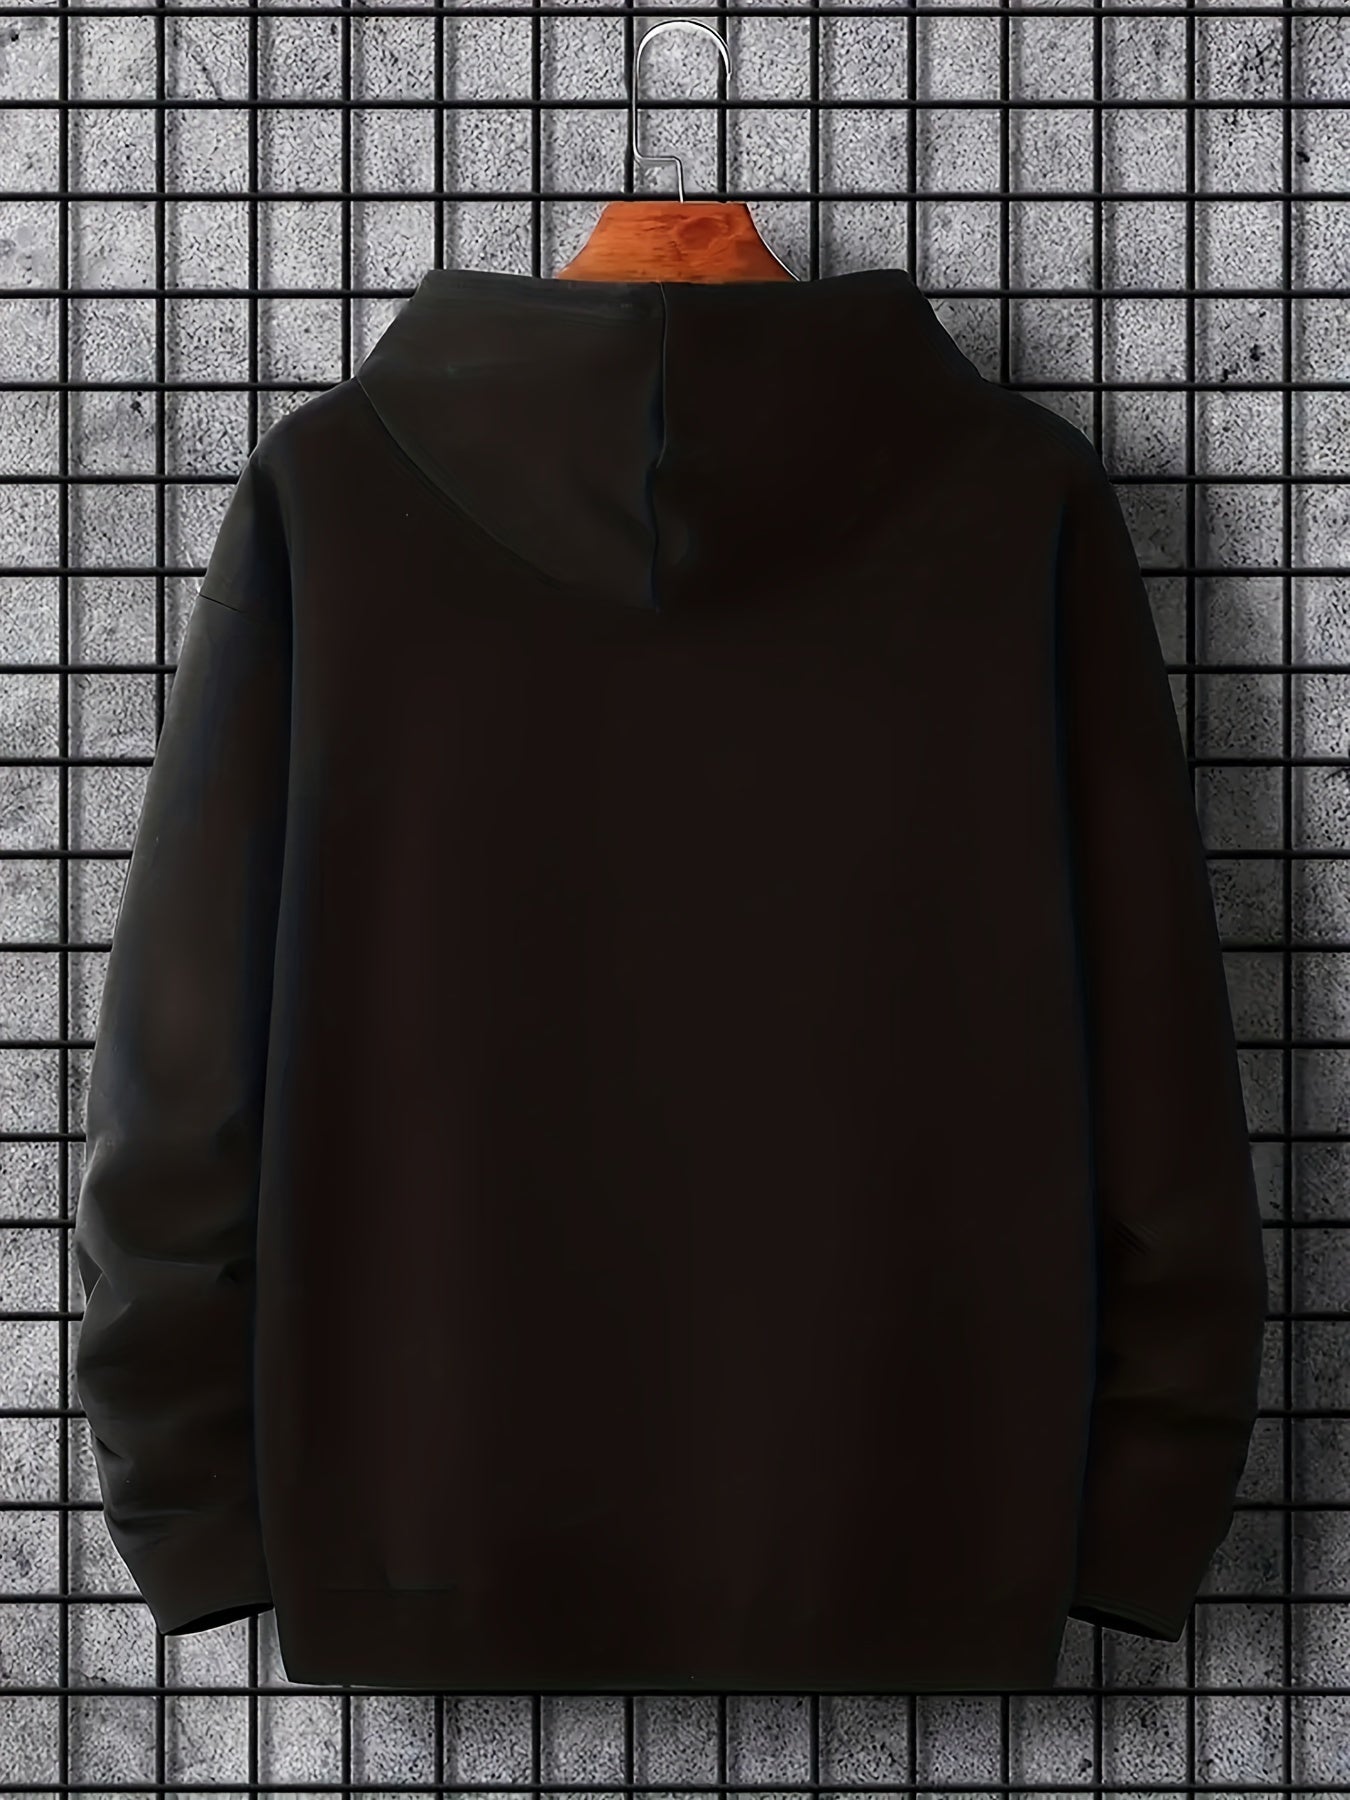 Jesus Swag Unisex Christian Pullover Hooded Sweatshirt claimedbygoddesigns